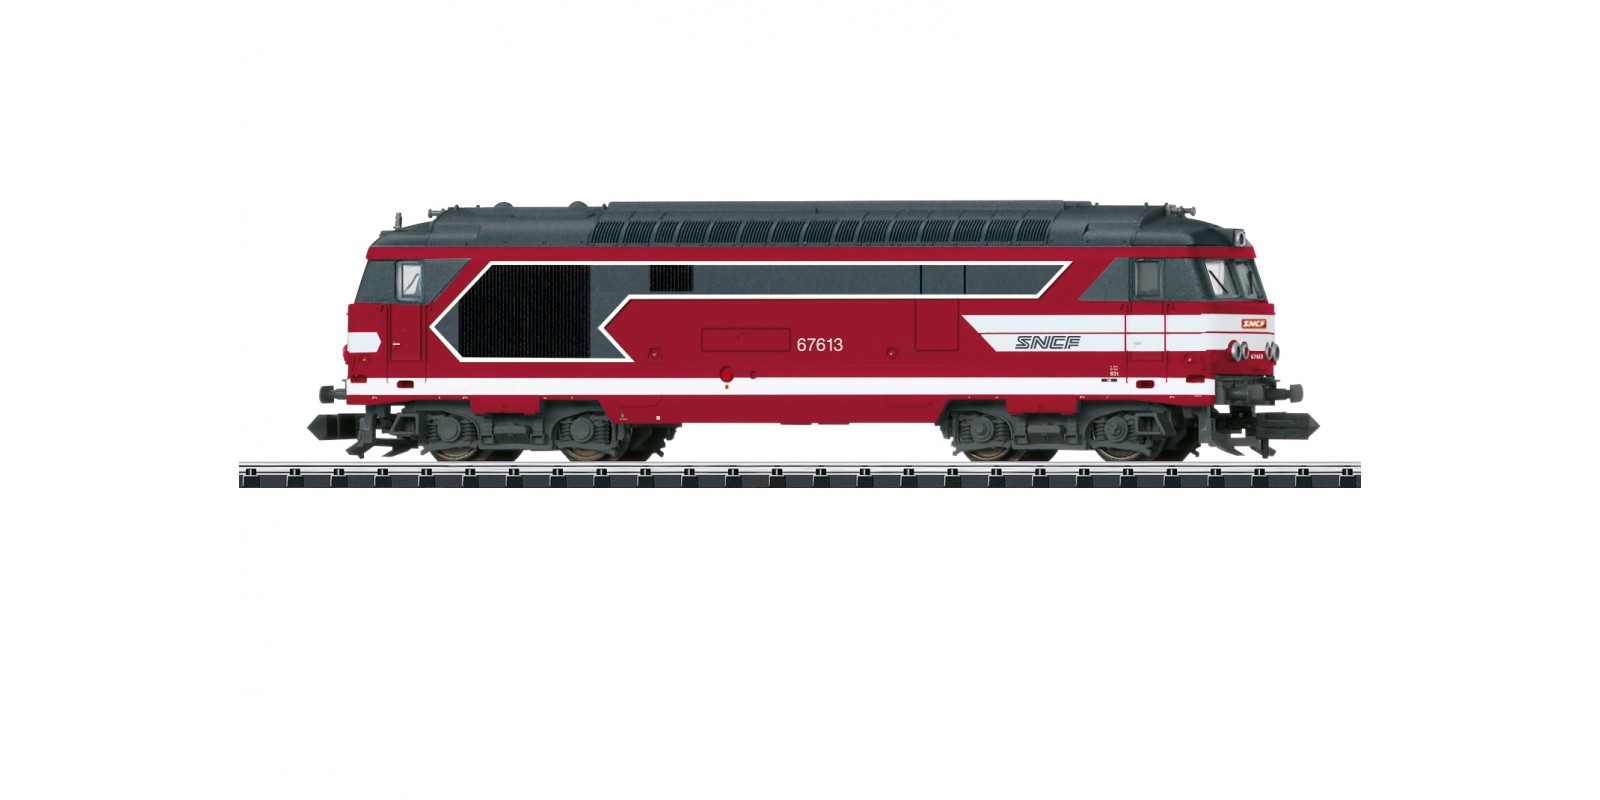 T16706 Class BB 67400 Diesel Locomotive